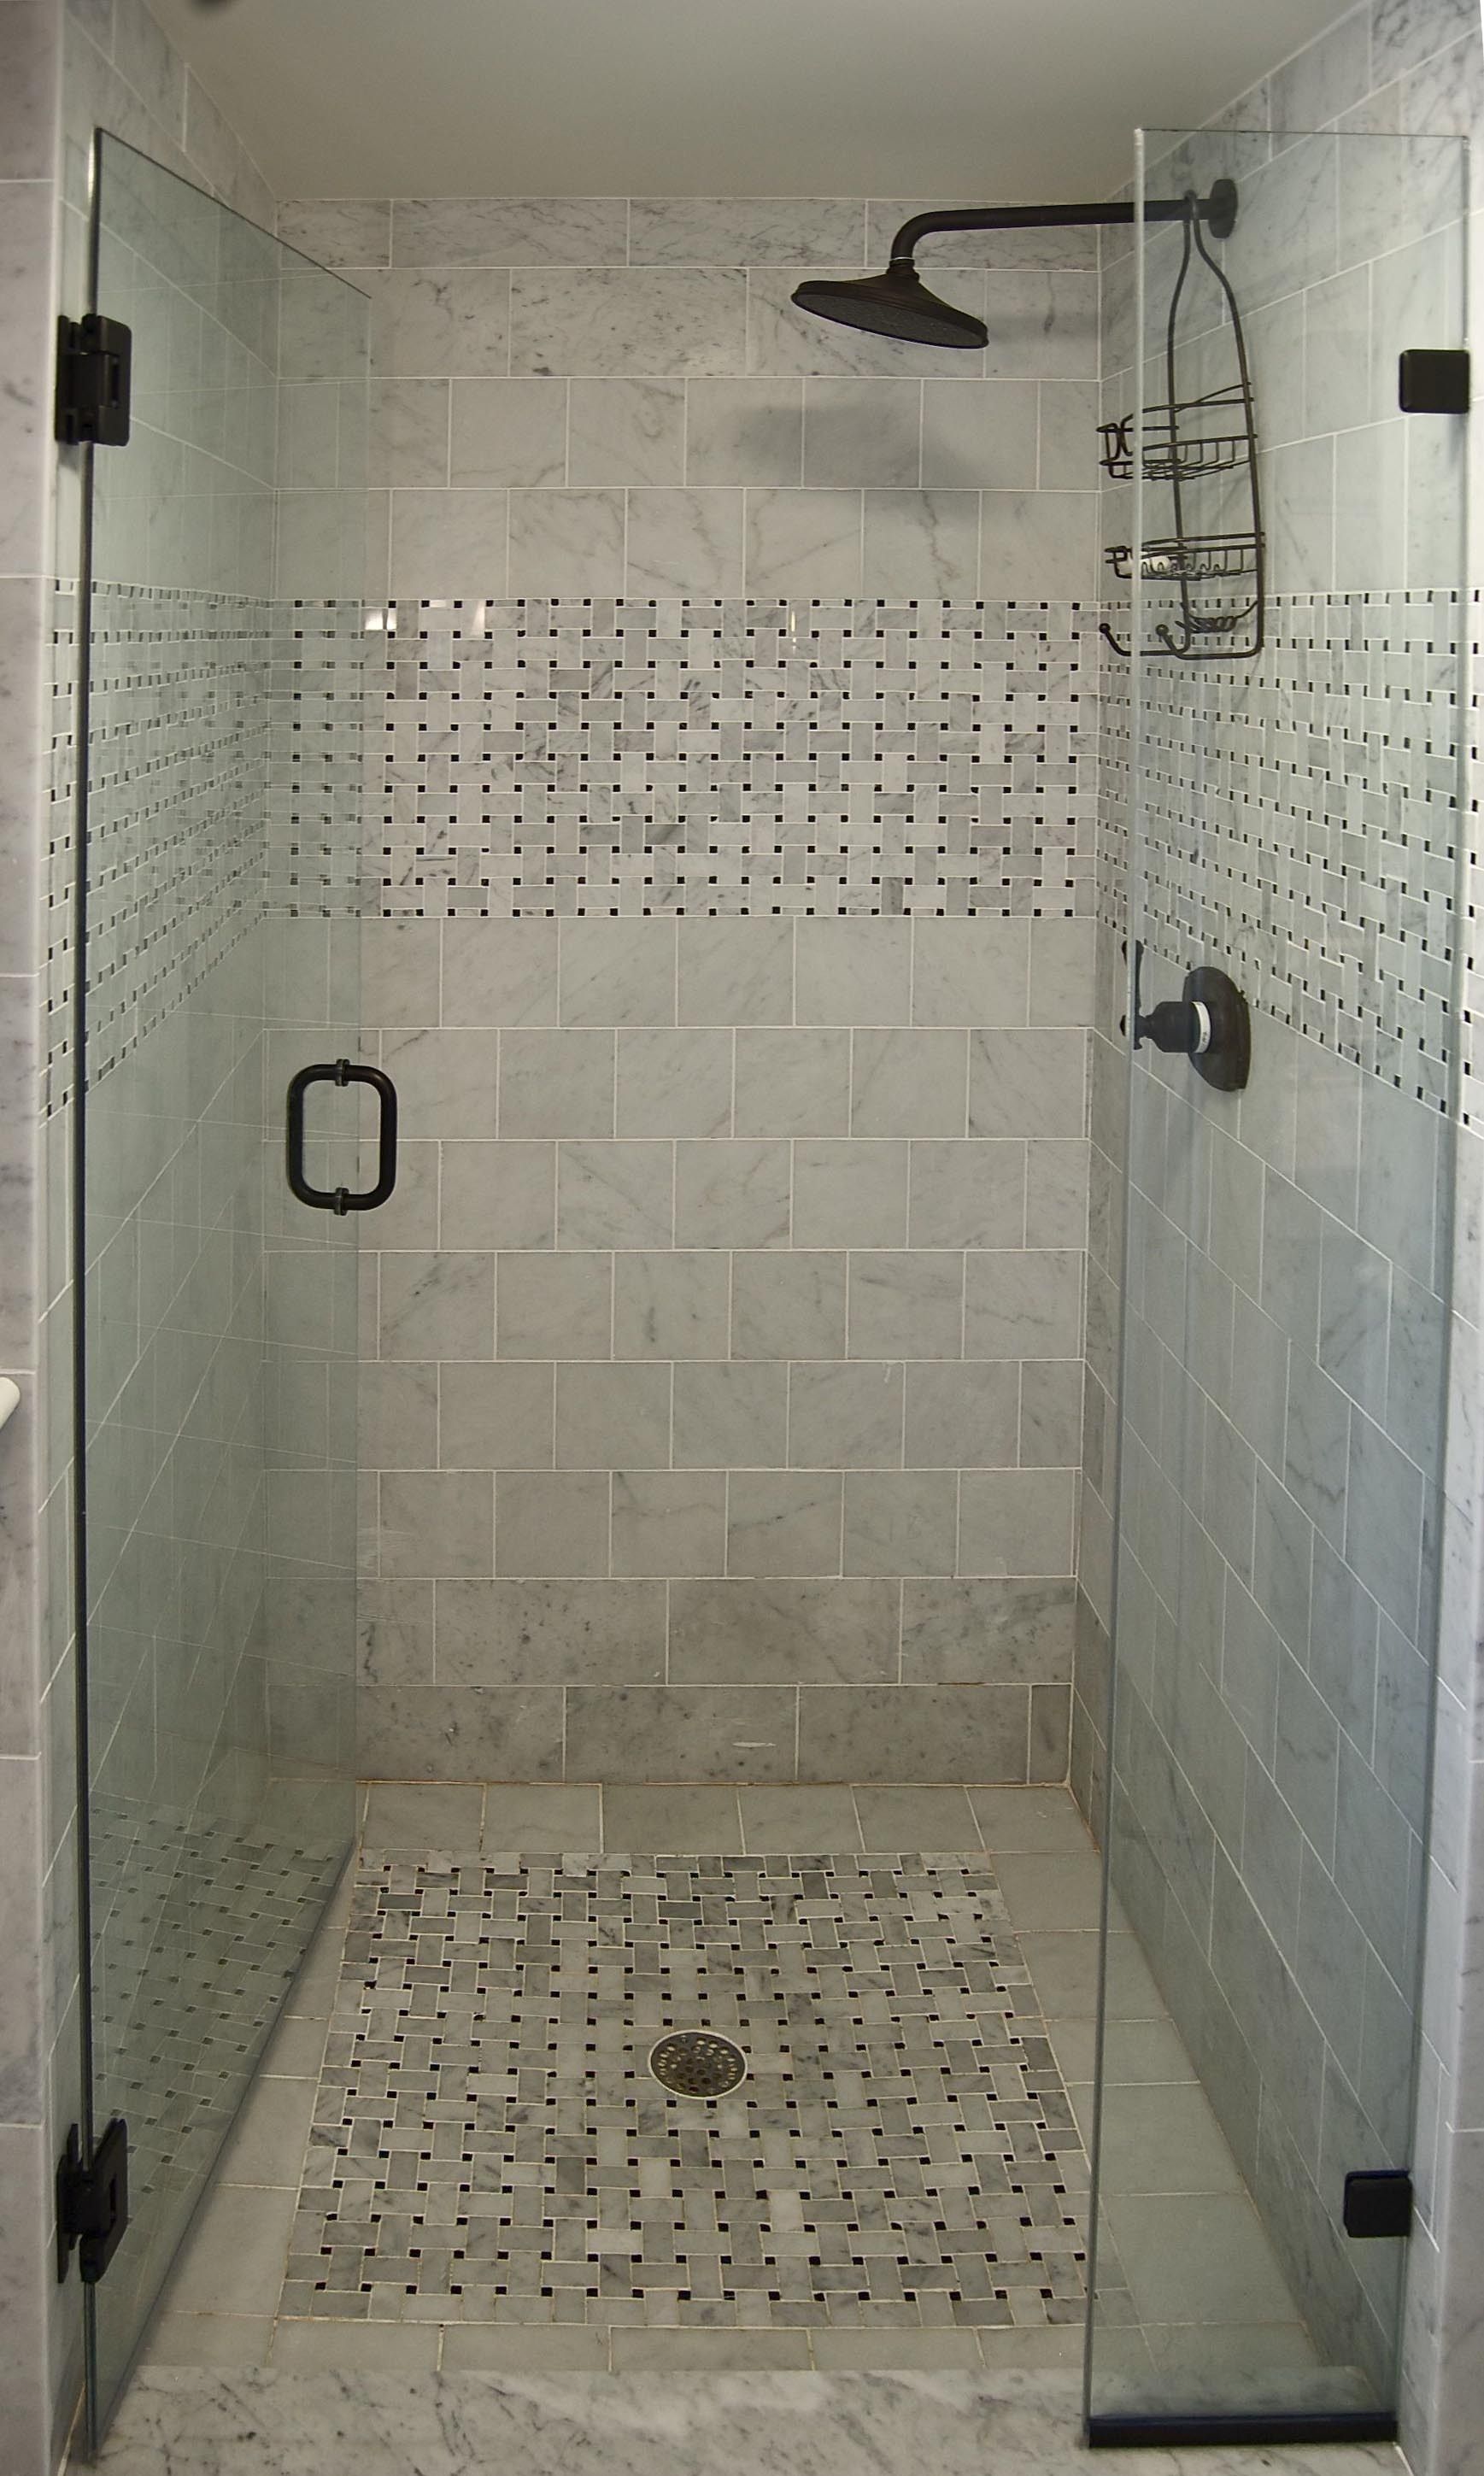 img/master-bathroom-tile-images-de.jpg